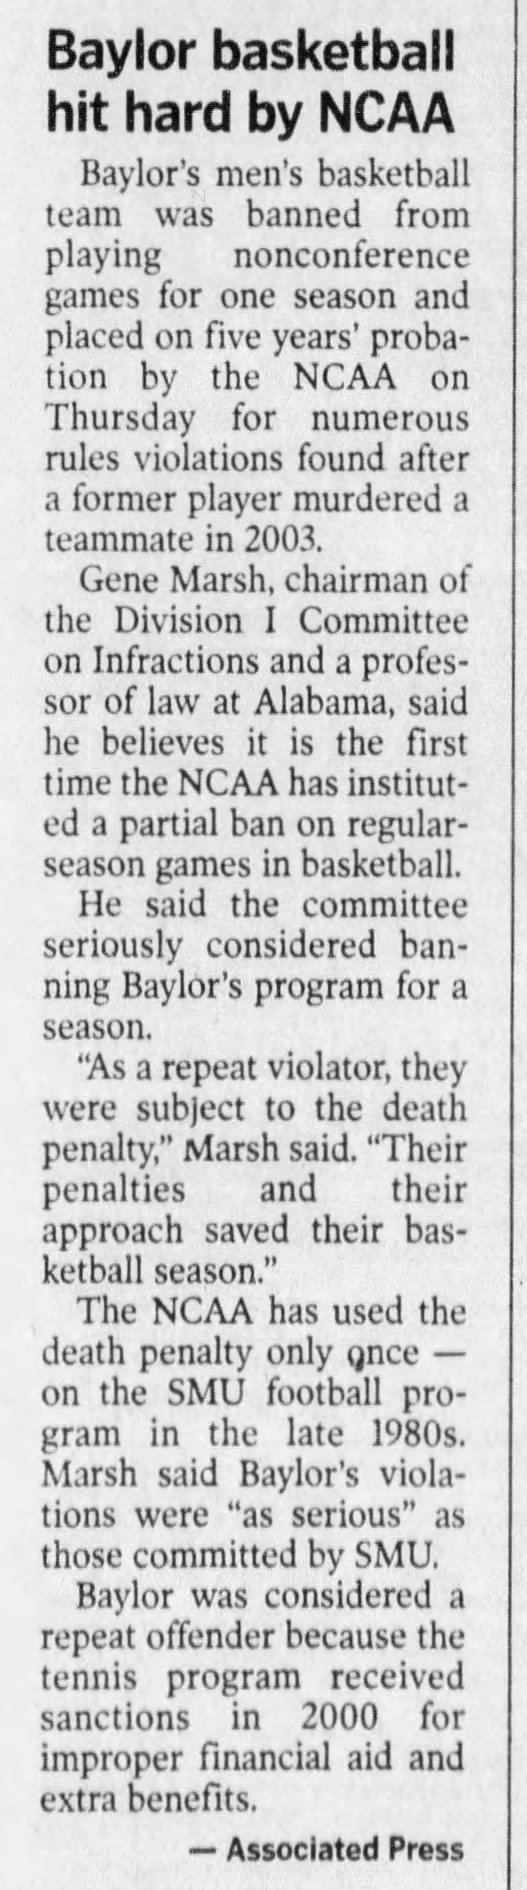 Baylor basketball hit hard by NCAA